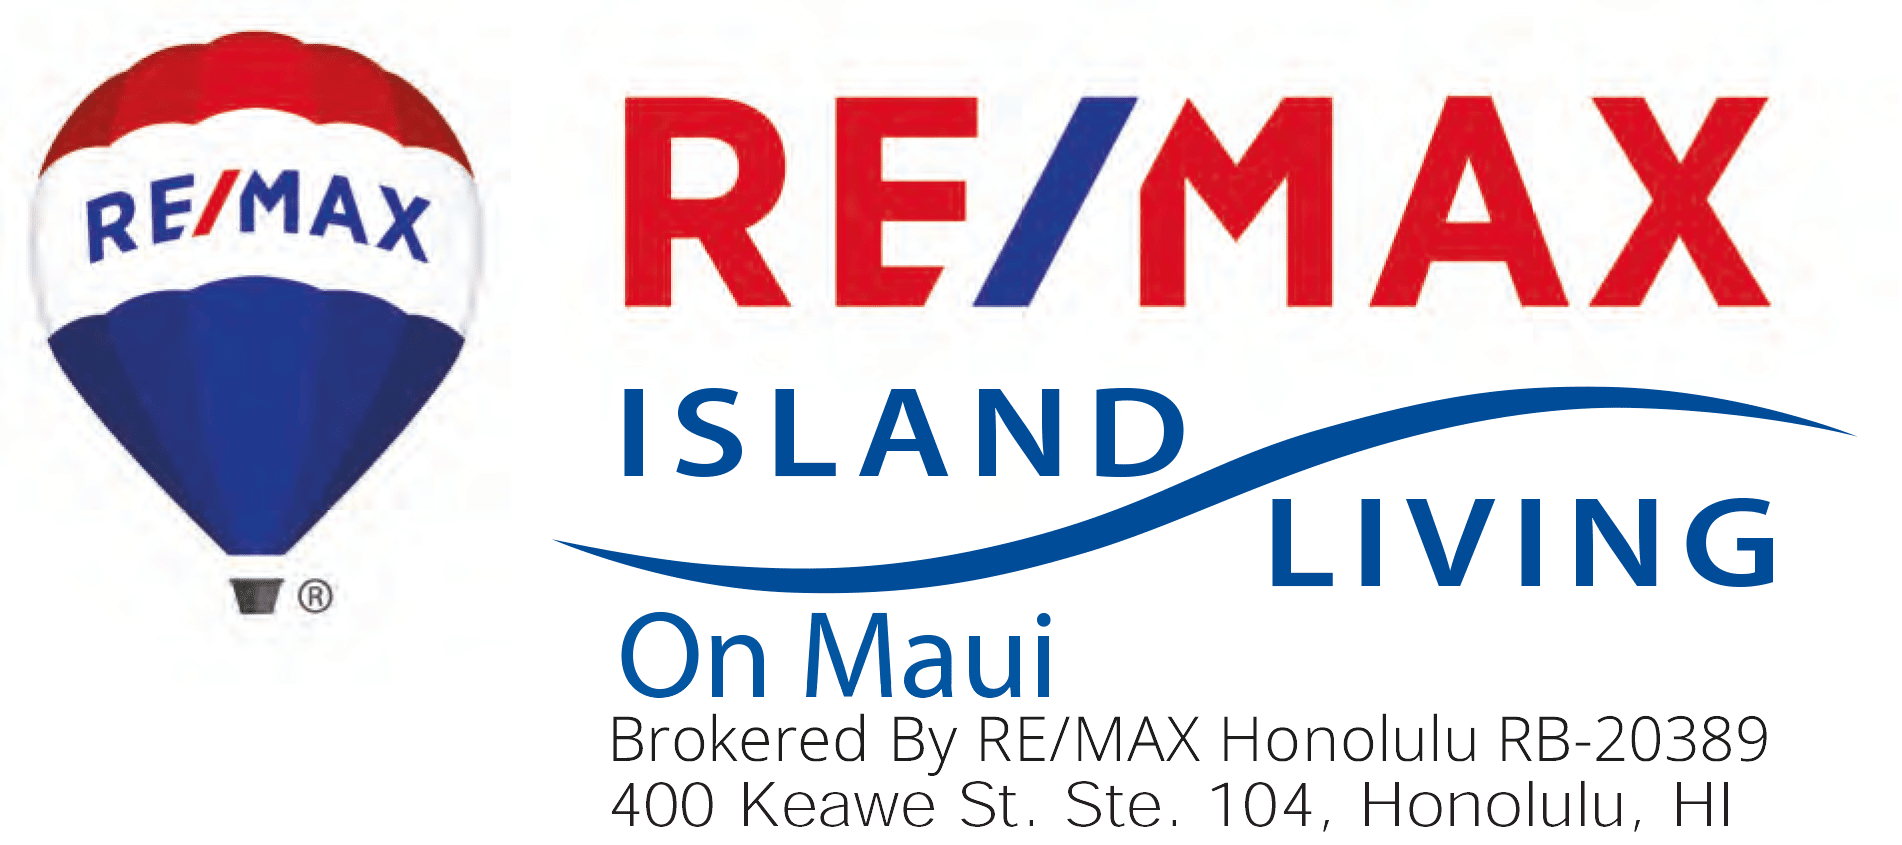 Re/Max Island Living